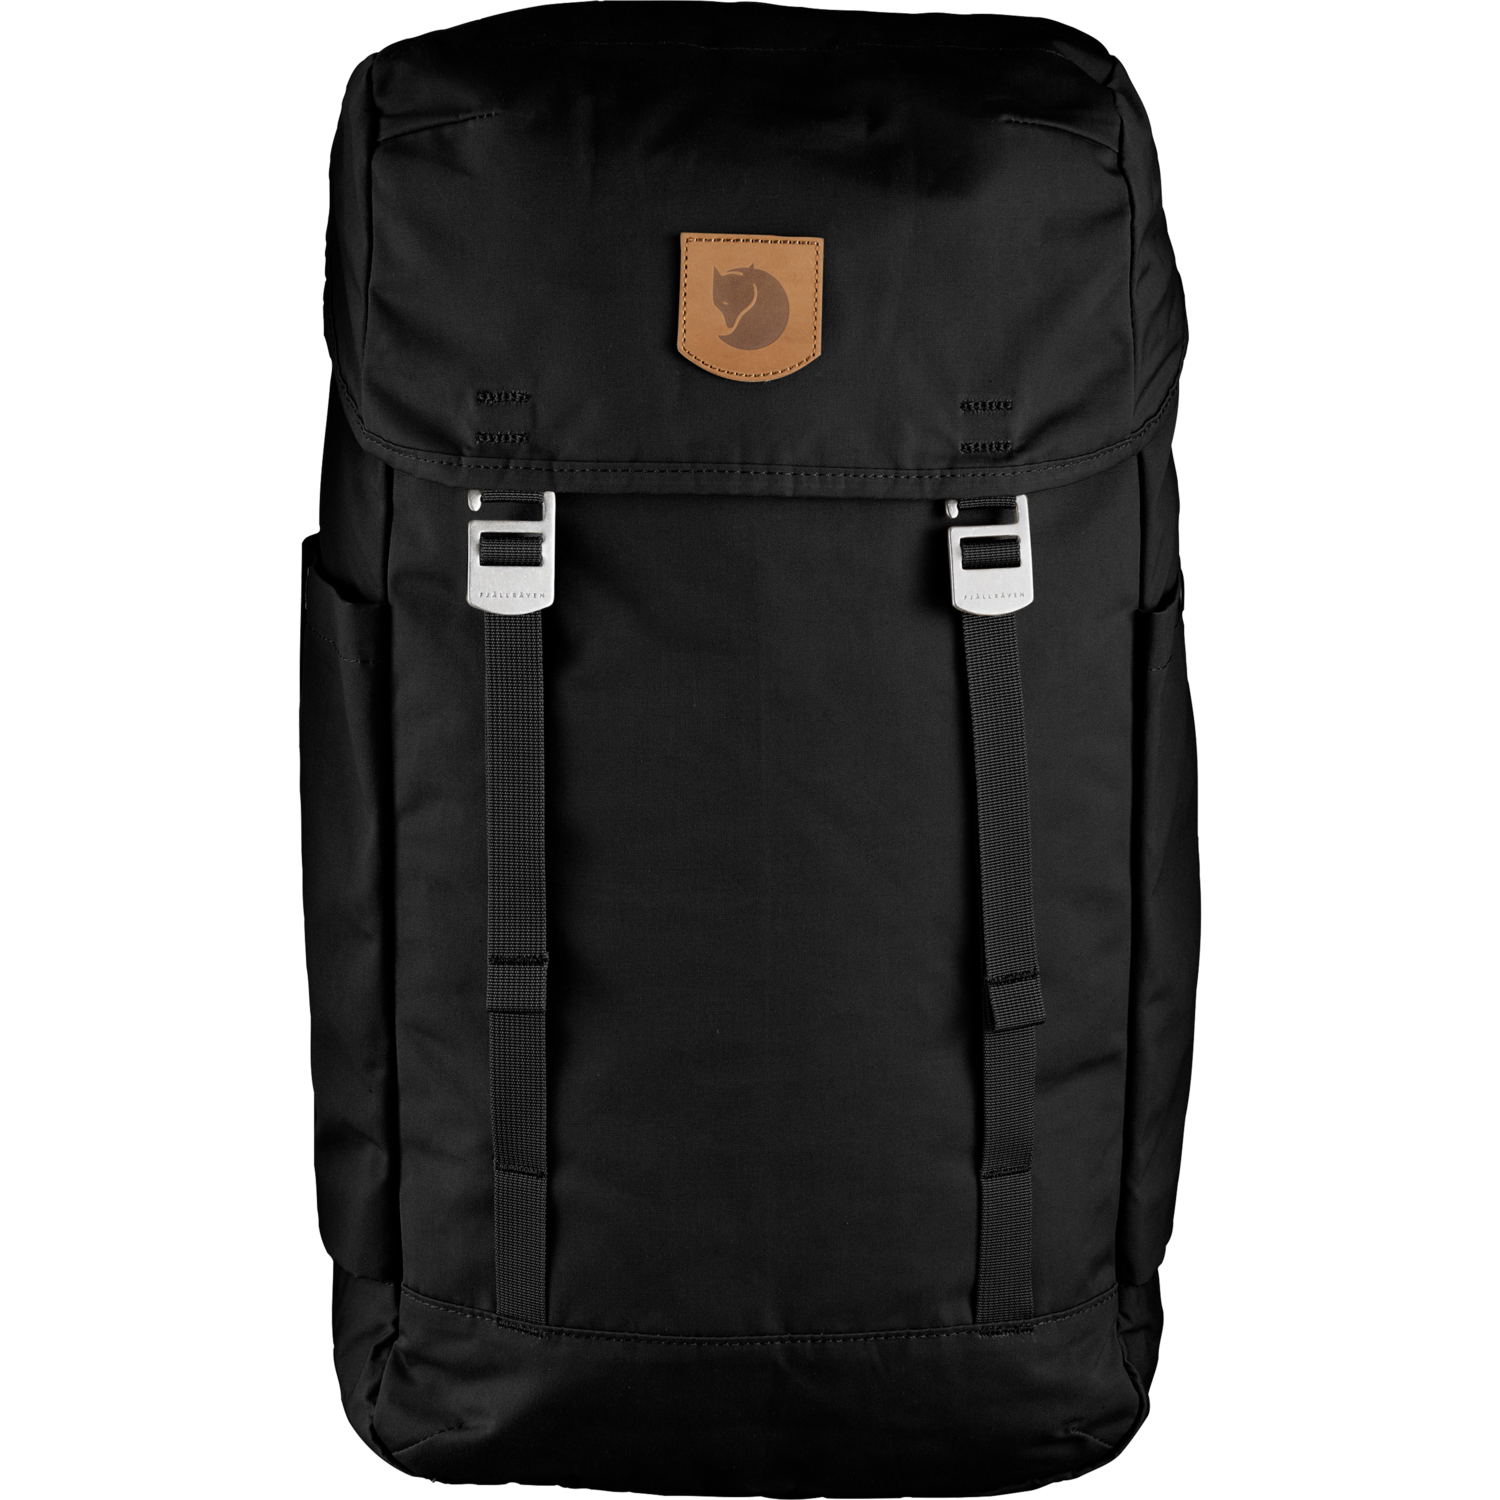 Backpacks for jungle suffari